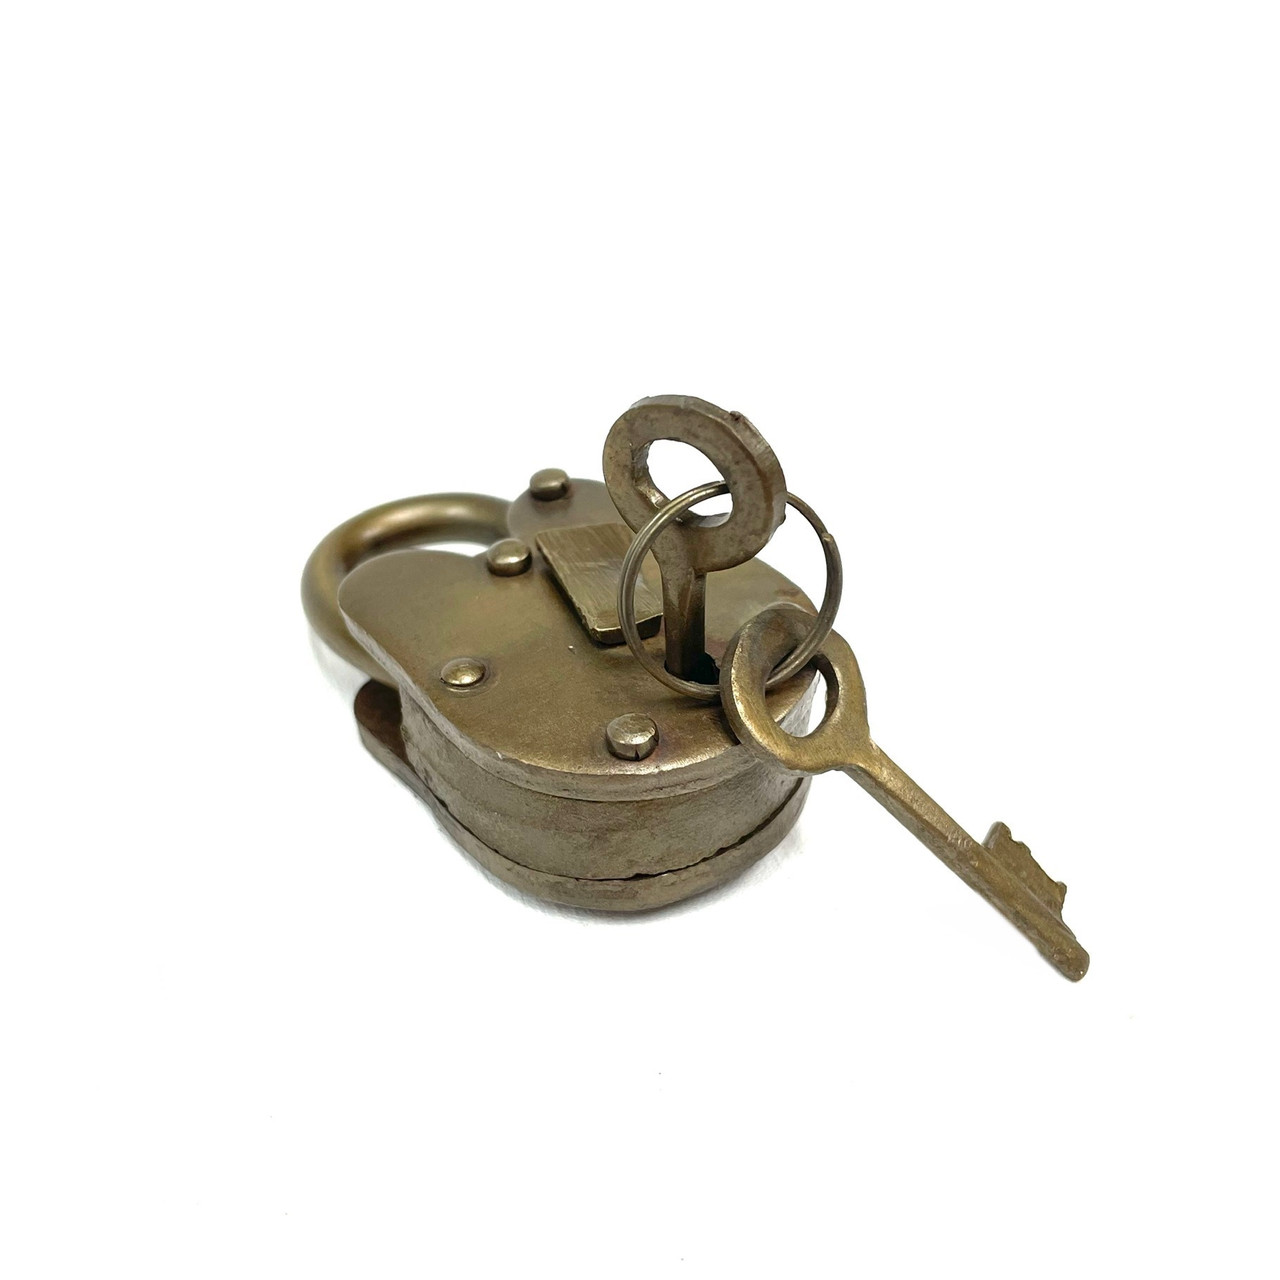 Vintage Skeleton Key and Lock Charm Bracelet